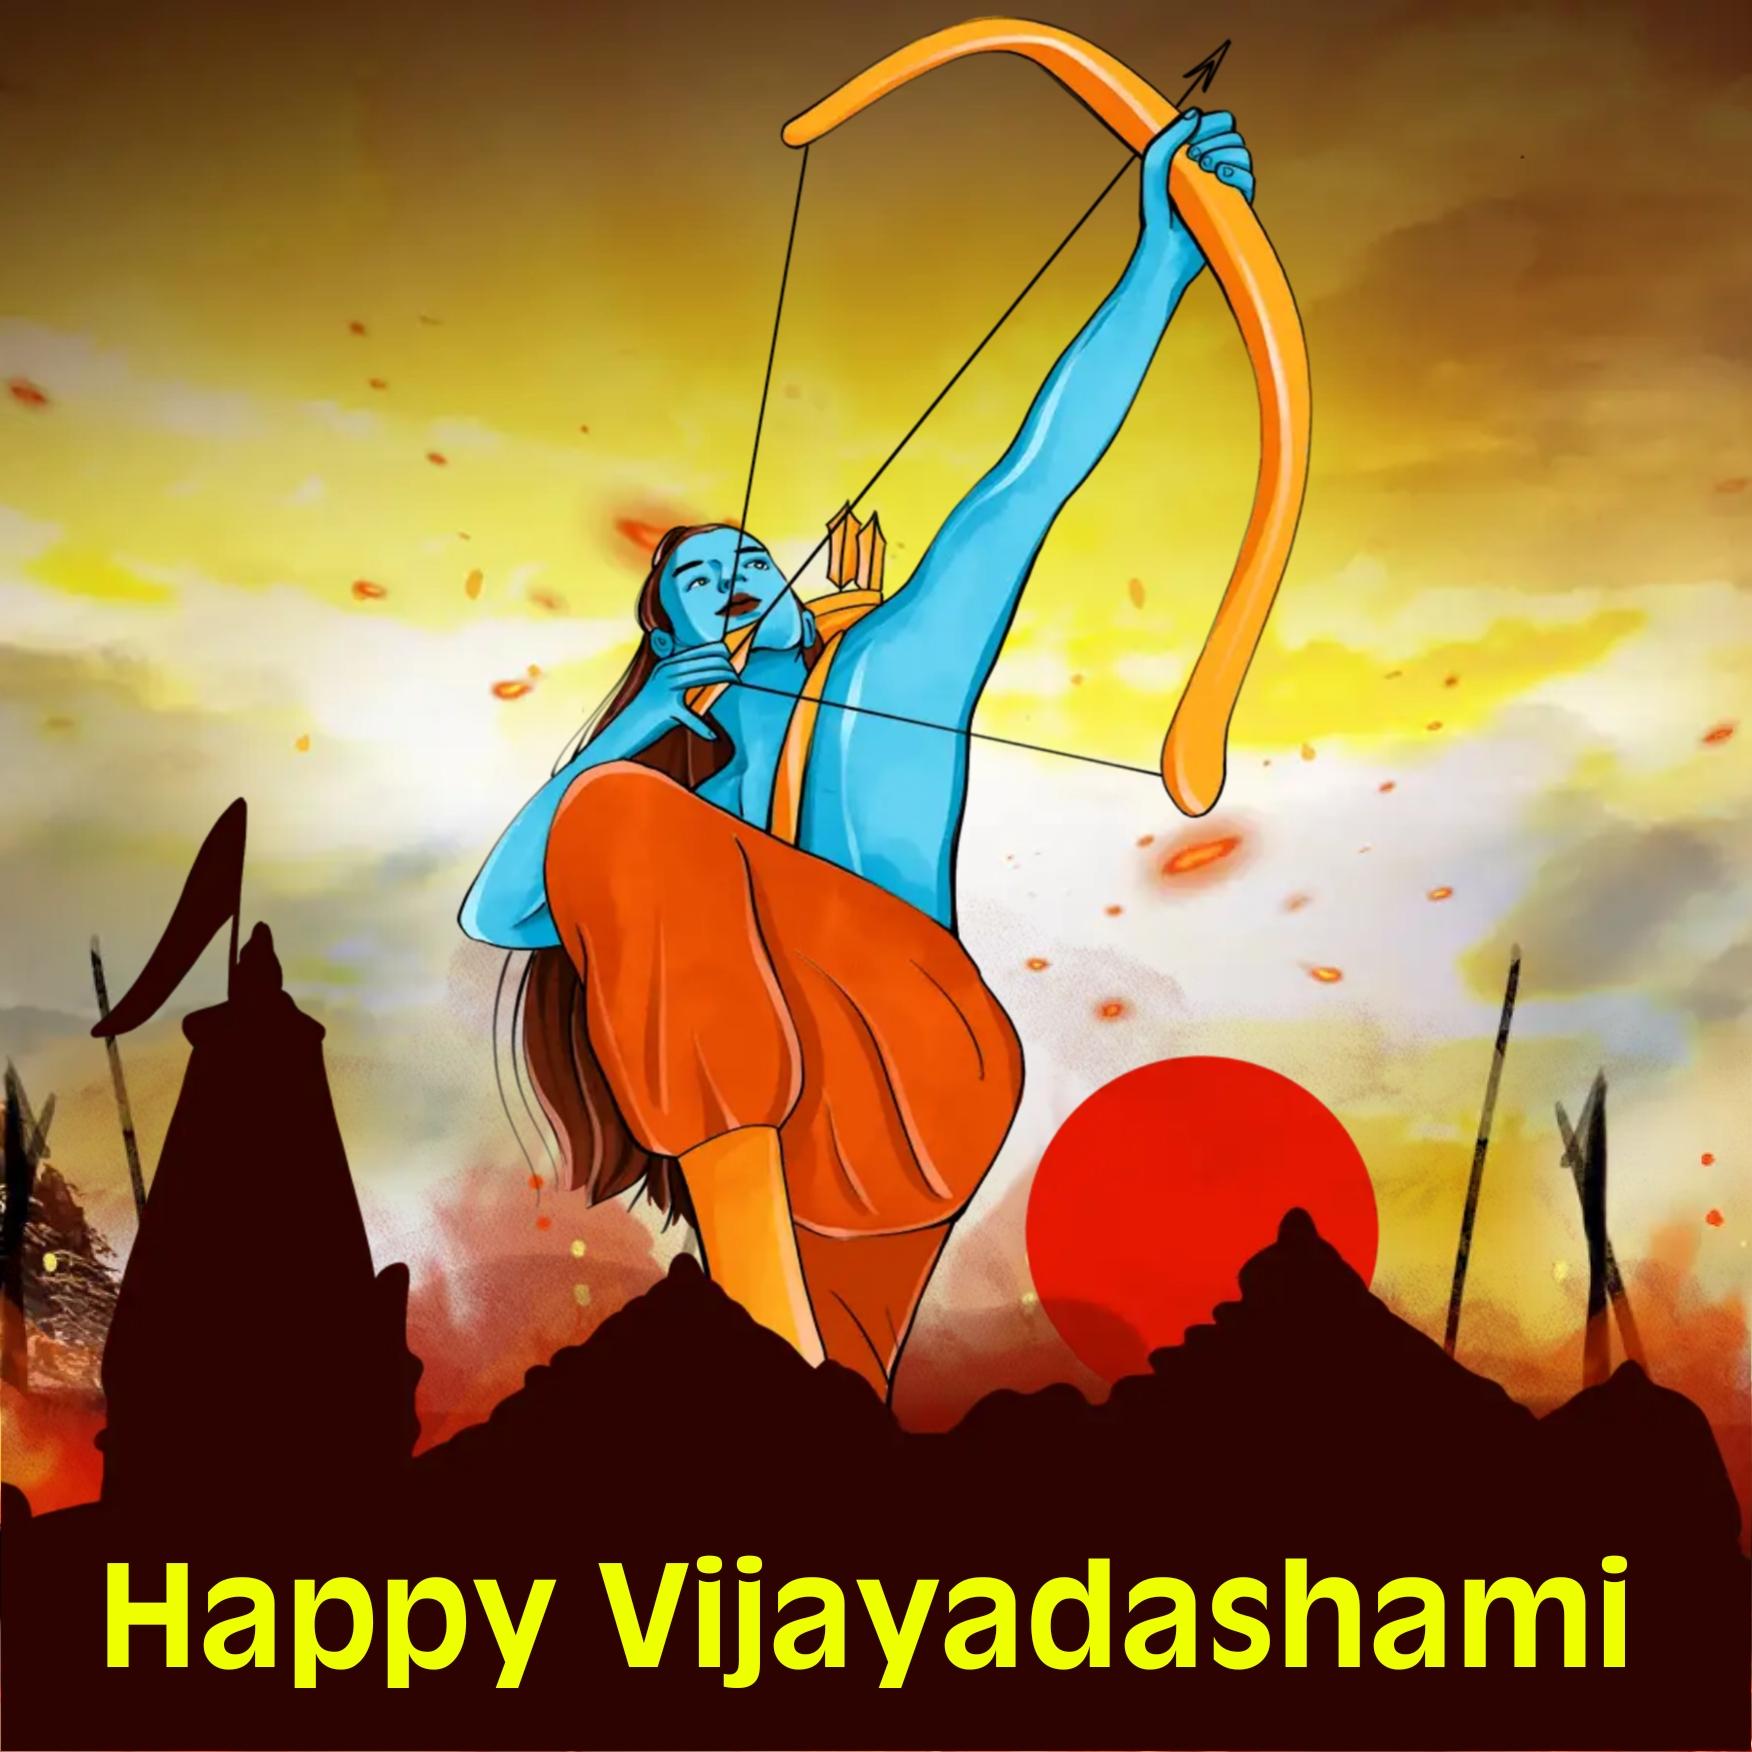 Happy Vijayadashami Images